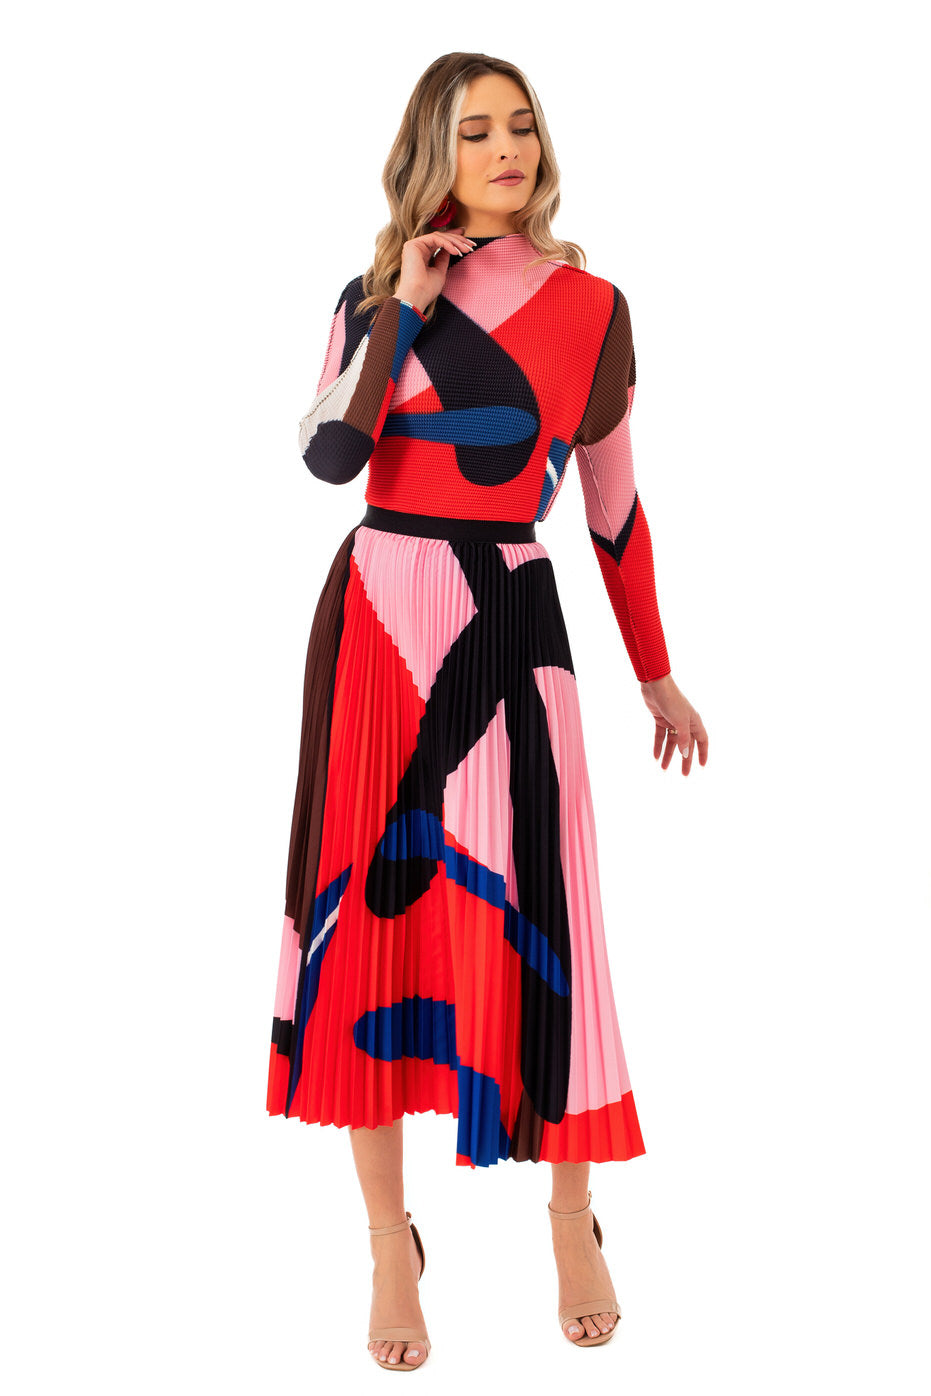 Costum Multicolor cu Fusta Plisata - LIMITED EDITION